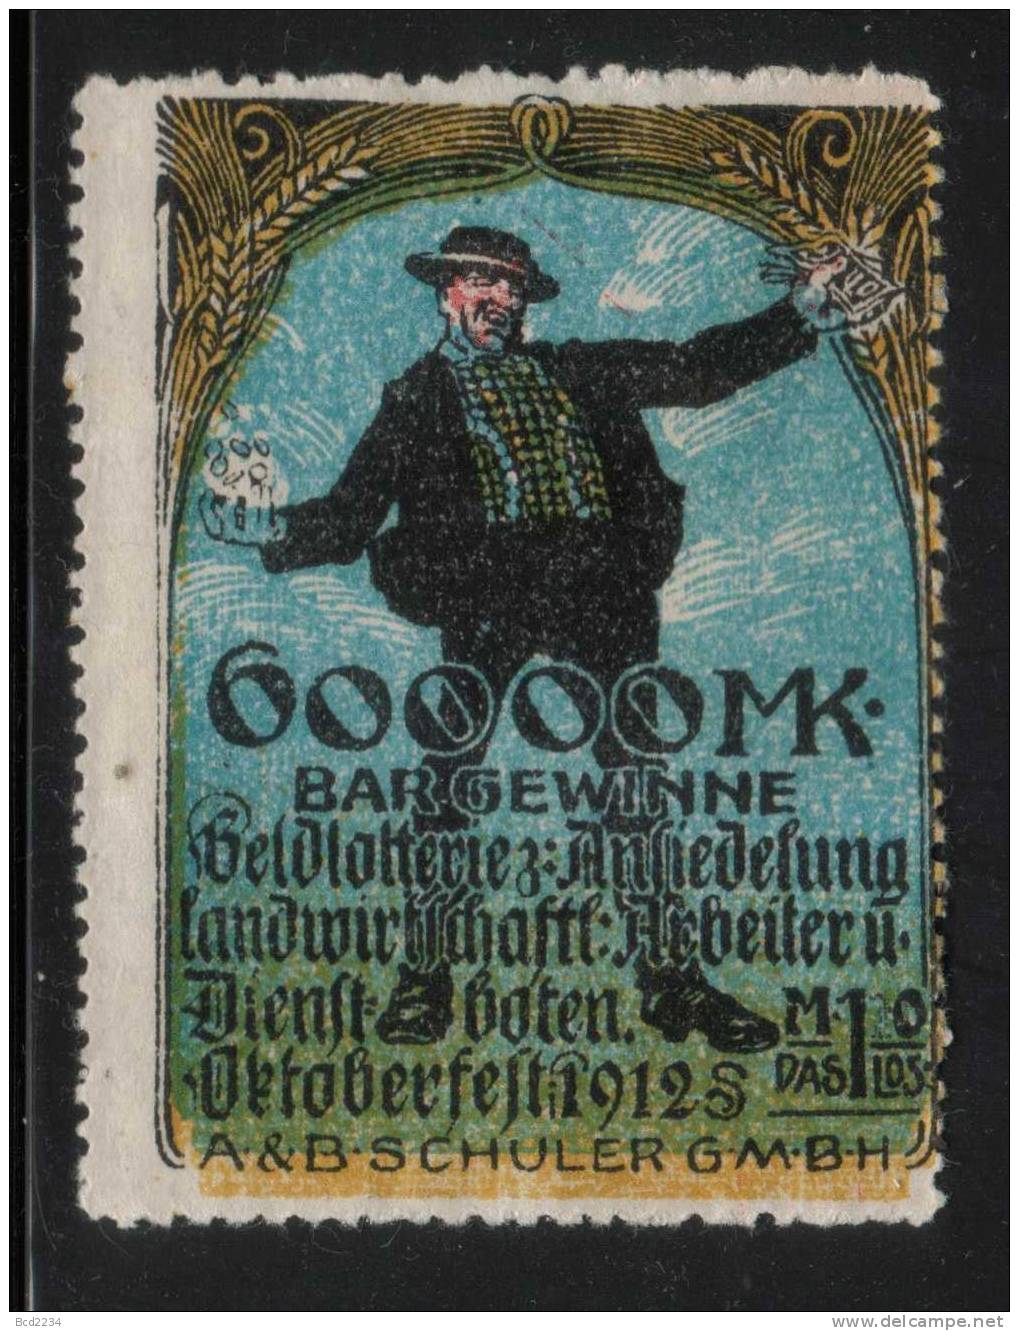 GERMANY 1912 OKTOBERFEST GELDLOTTERIE OCTOBERFEST AGRICULTURAL WORKERS LOTTERY POSTER STAMP REKLAMENMARKE NO GUM Coins - Coins